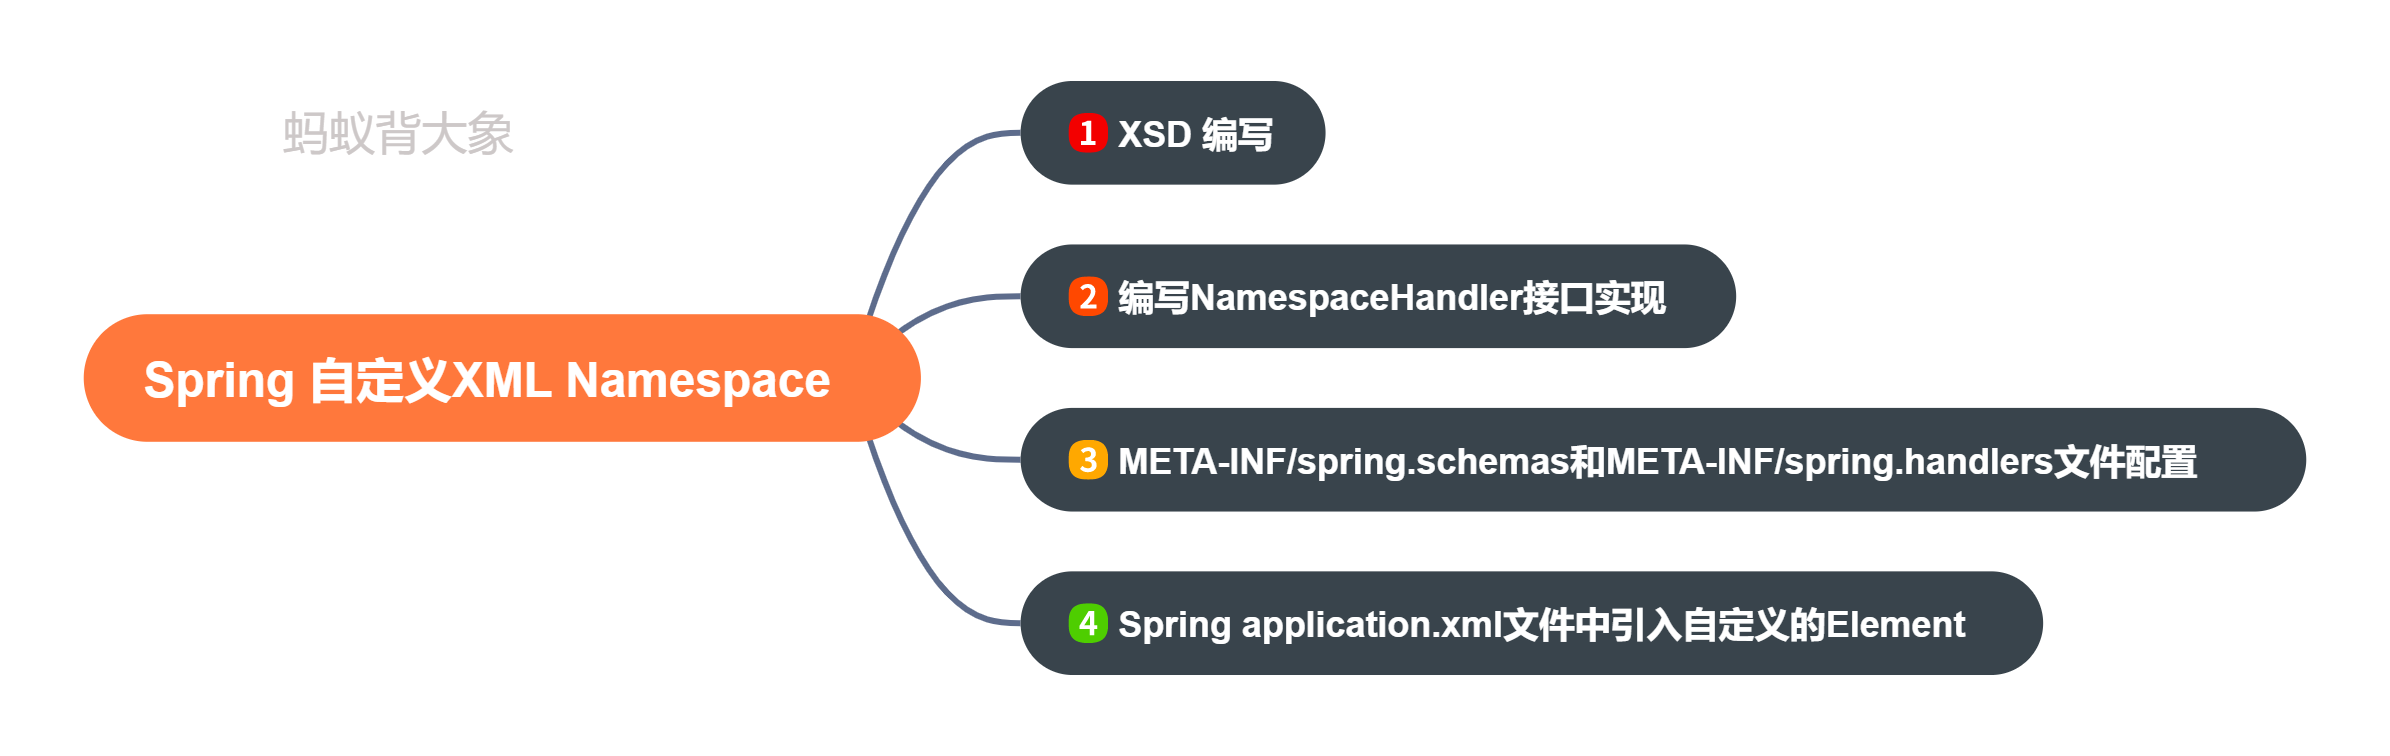 Spring 自定义XML Namespace步骤